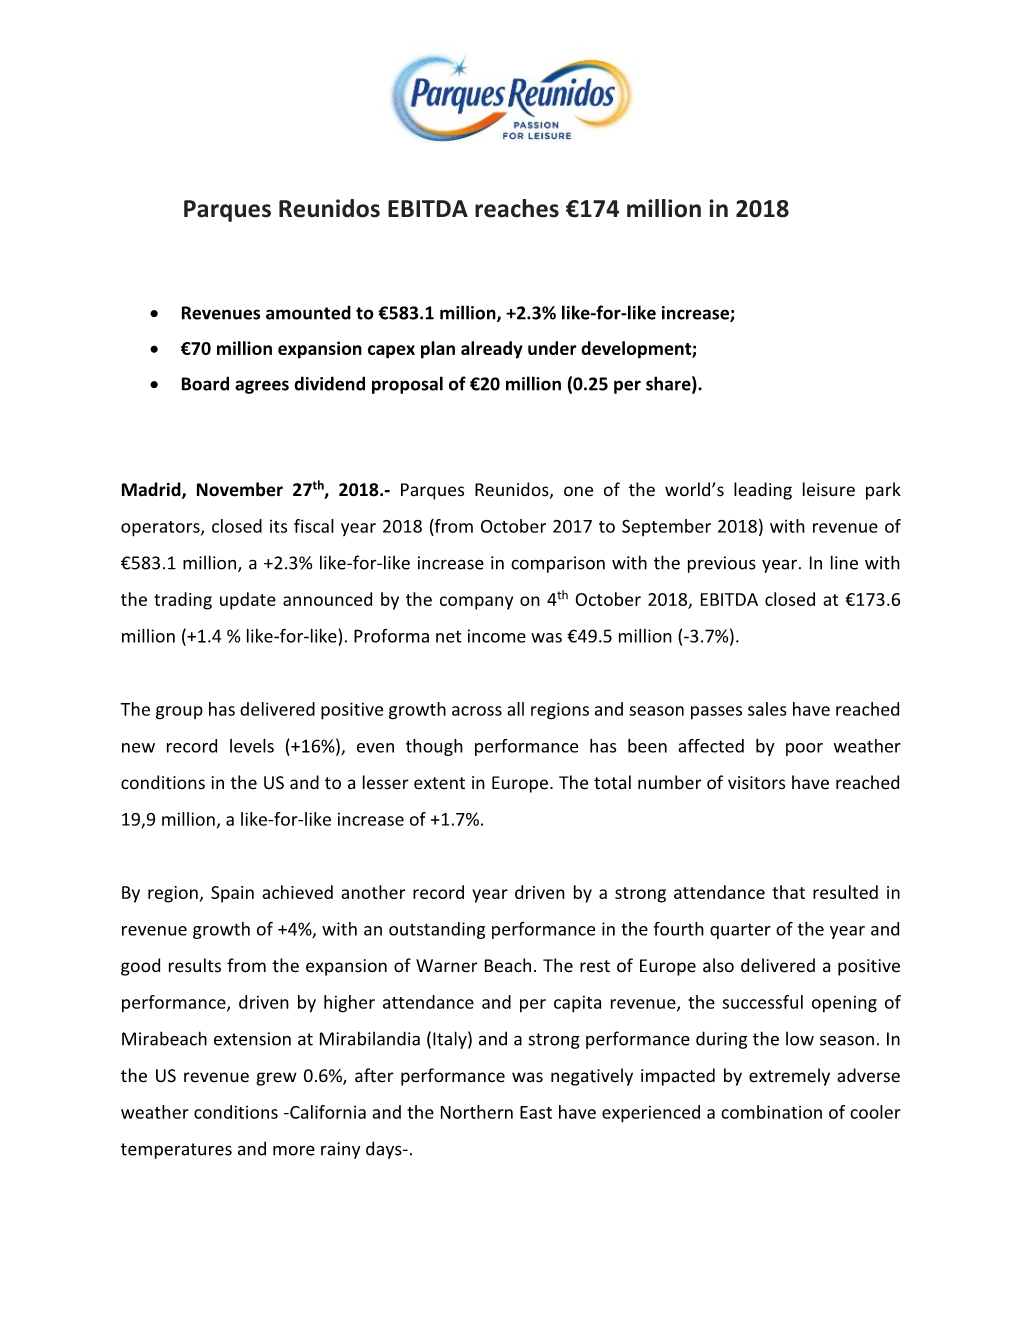 Parques Reunidos EBITDA Reaches €174 Million in 2018